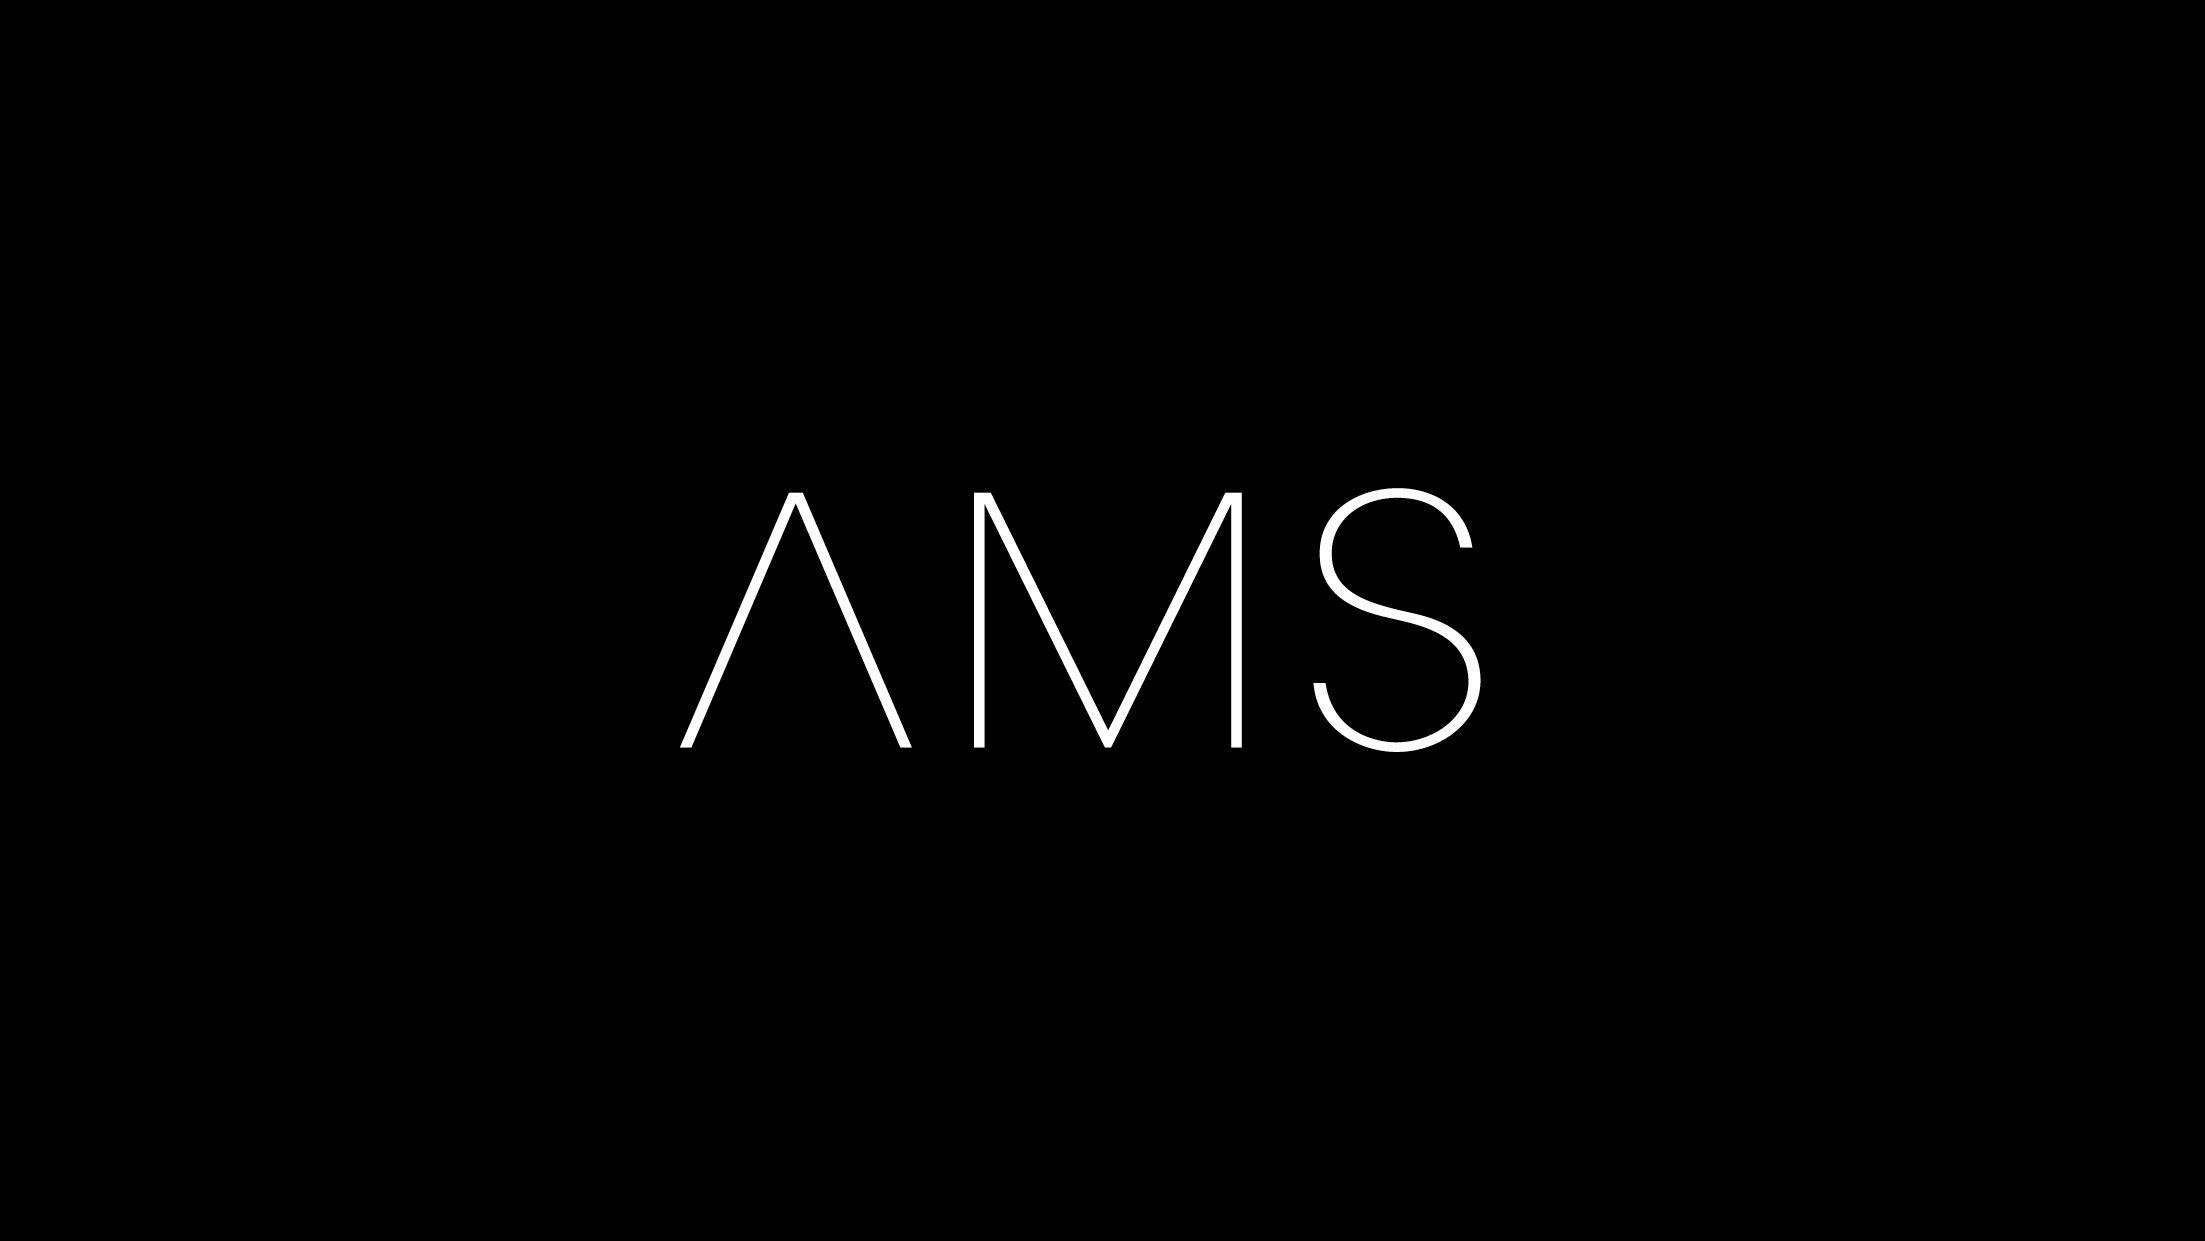 AMS Logo - AMS Araez. Freelance Graphic Designer & Art Director